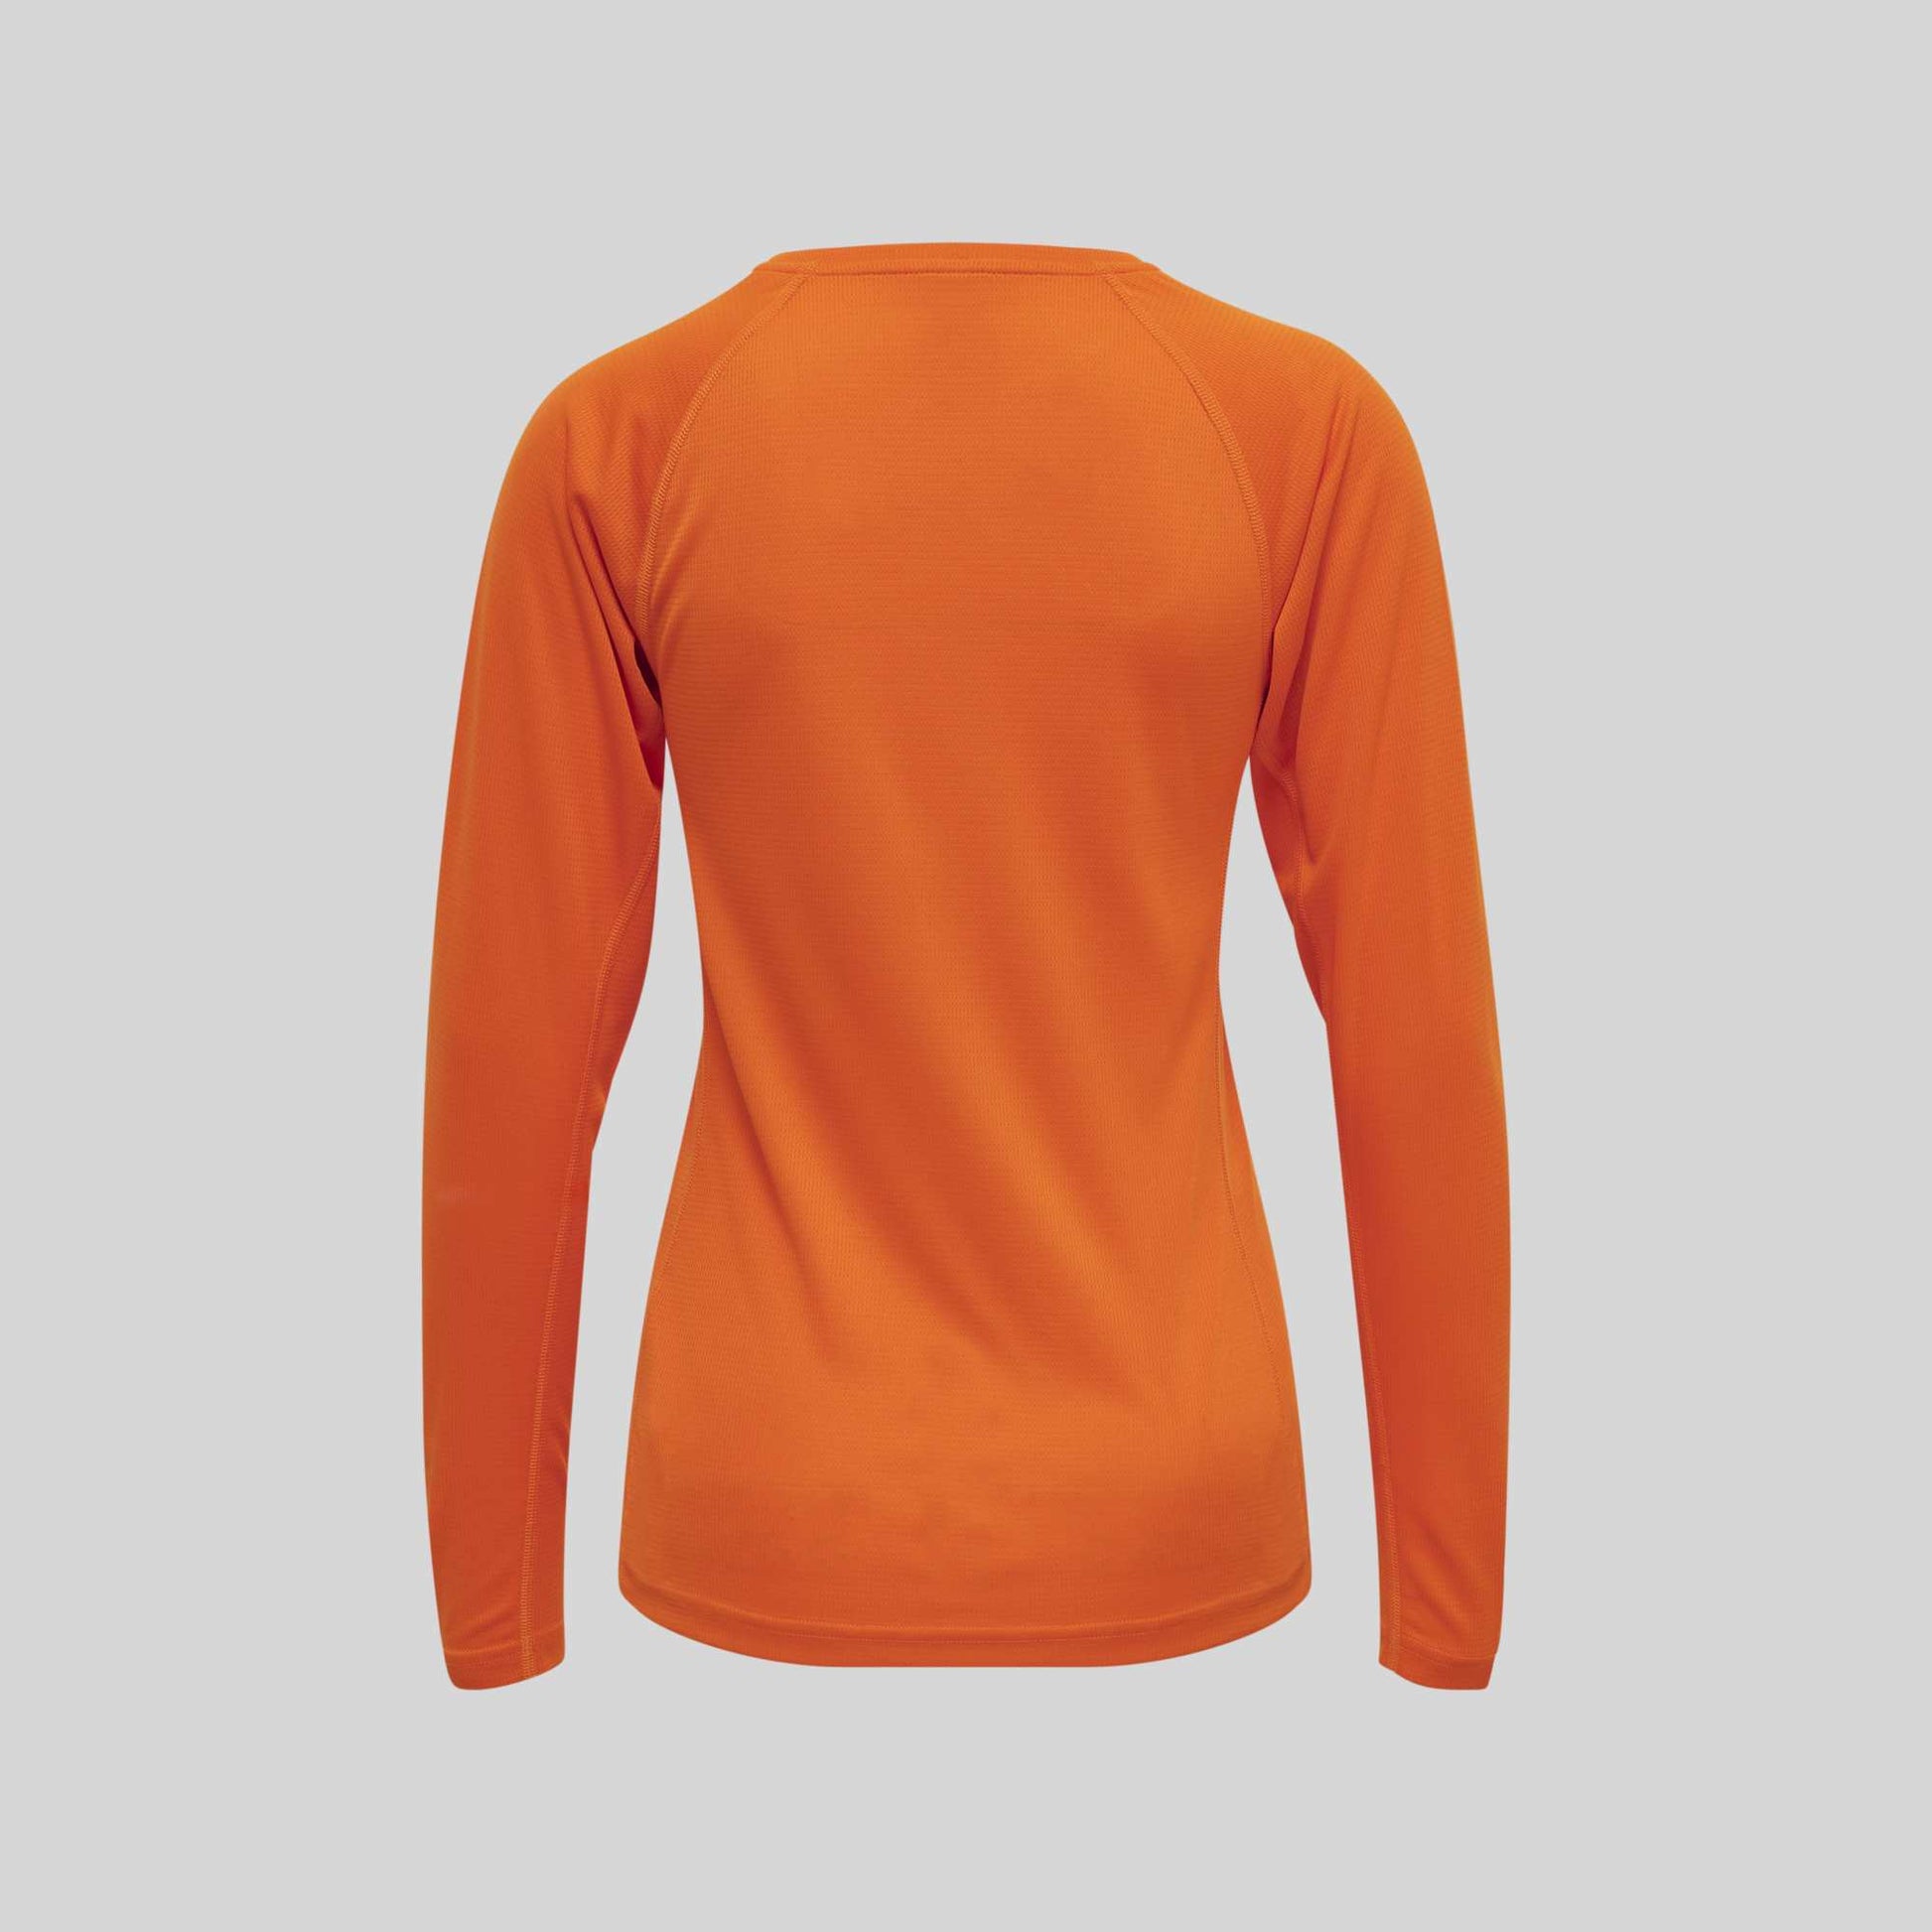 Power Running Tshirt Orange Women's - Sports Cartel